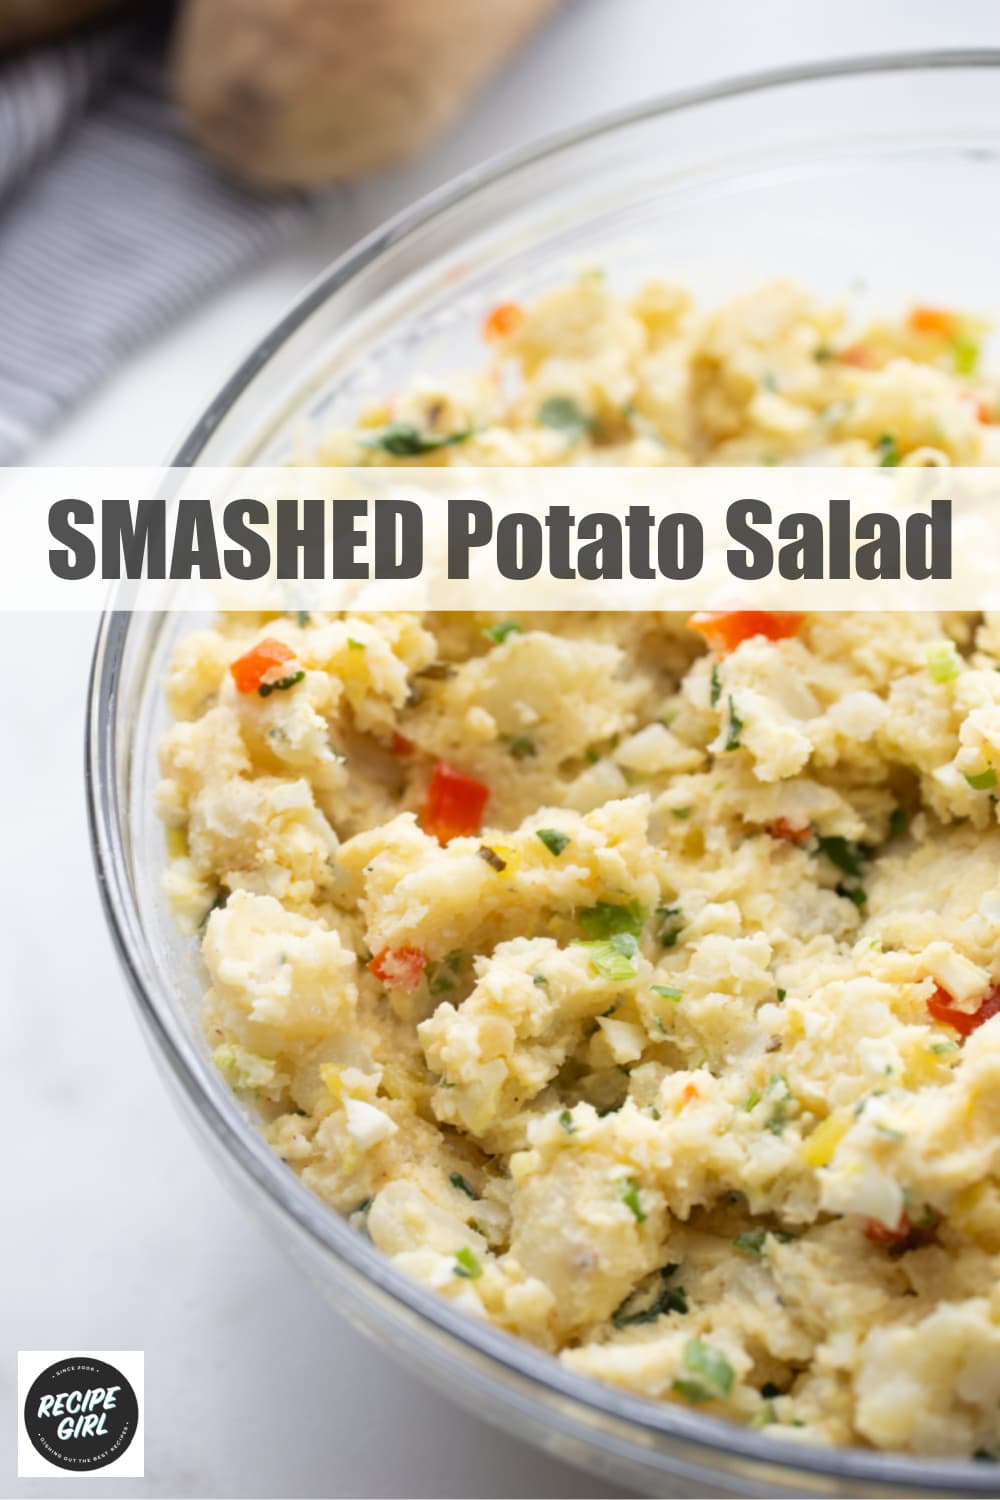 Smashed Potato Salad - Recipe Girl